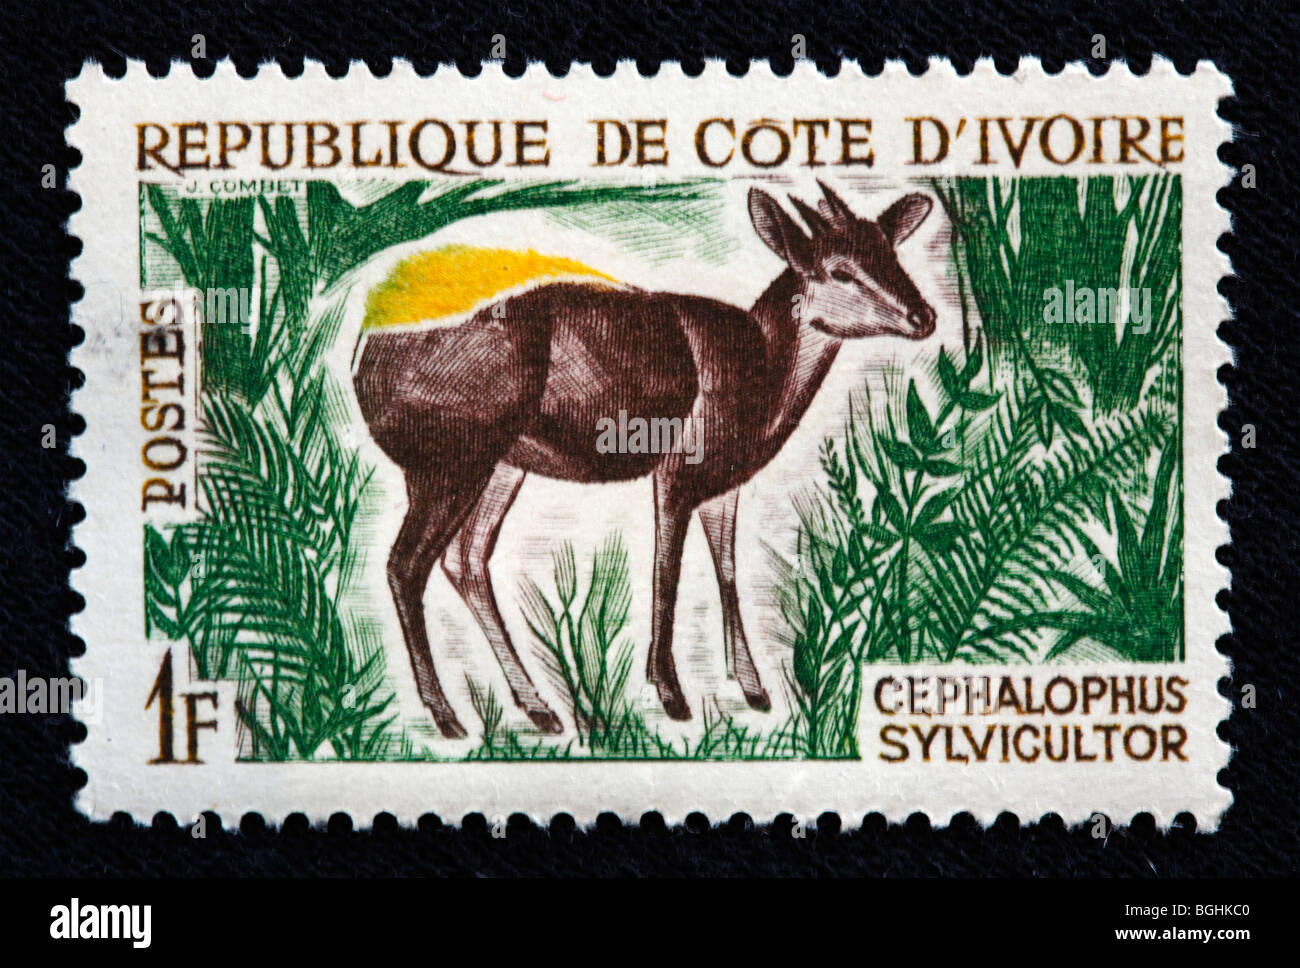 Cephlophus Sylvicultor, Briefmarke, Cote d ' Ivoire, 1970er Jahre Stockfoto